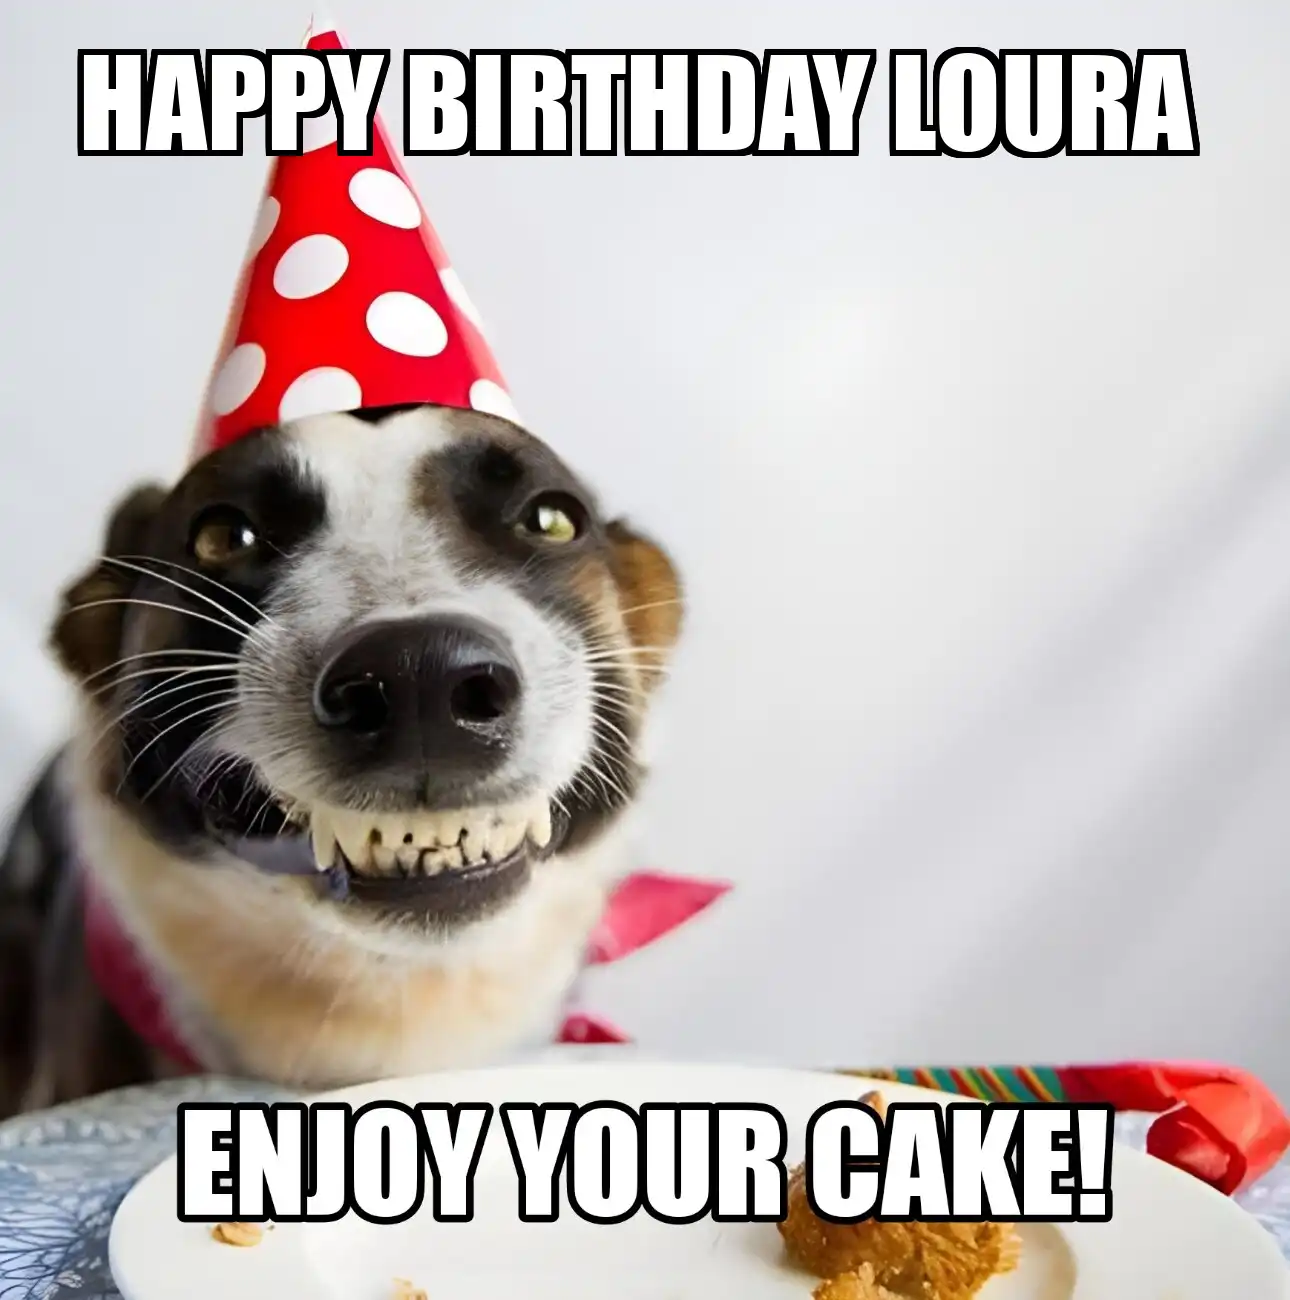 Happy Birthday Loura Enjoy Your Cake Dog Meme